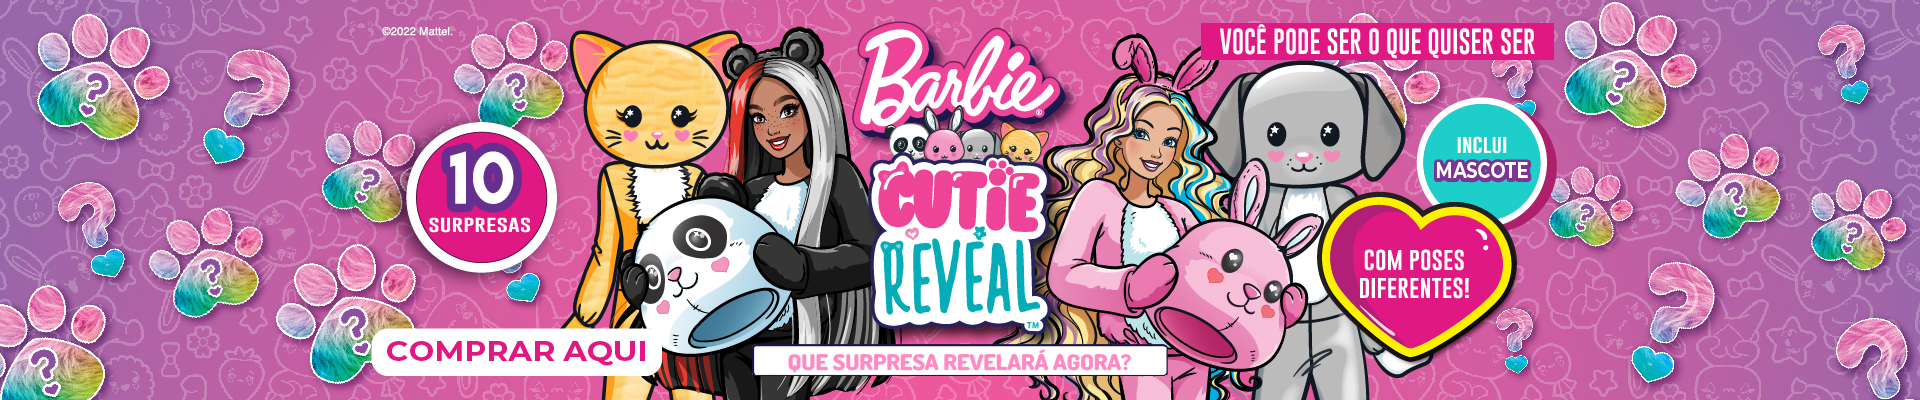 Boneca Barbie Cutie Reveal